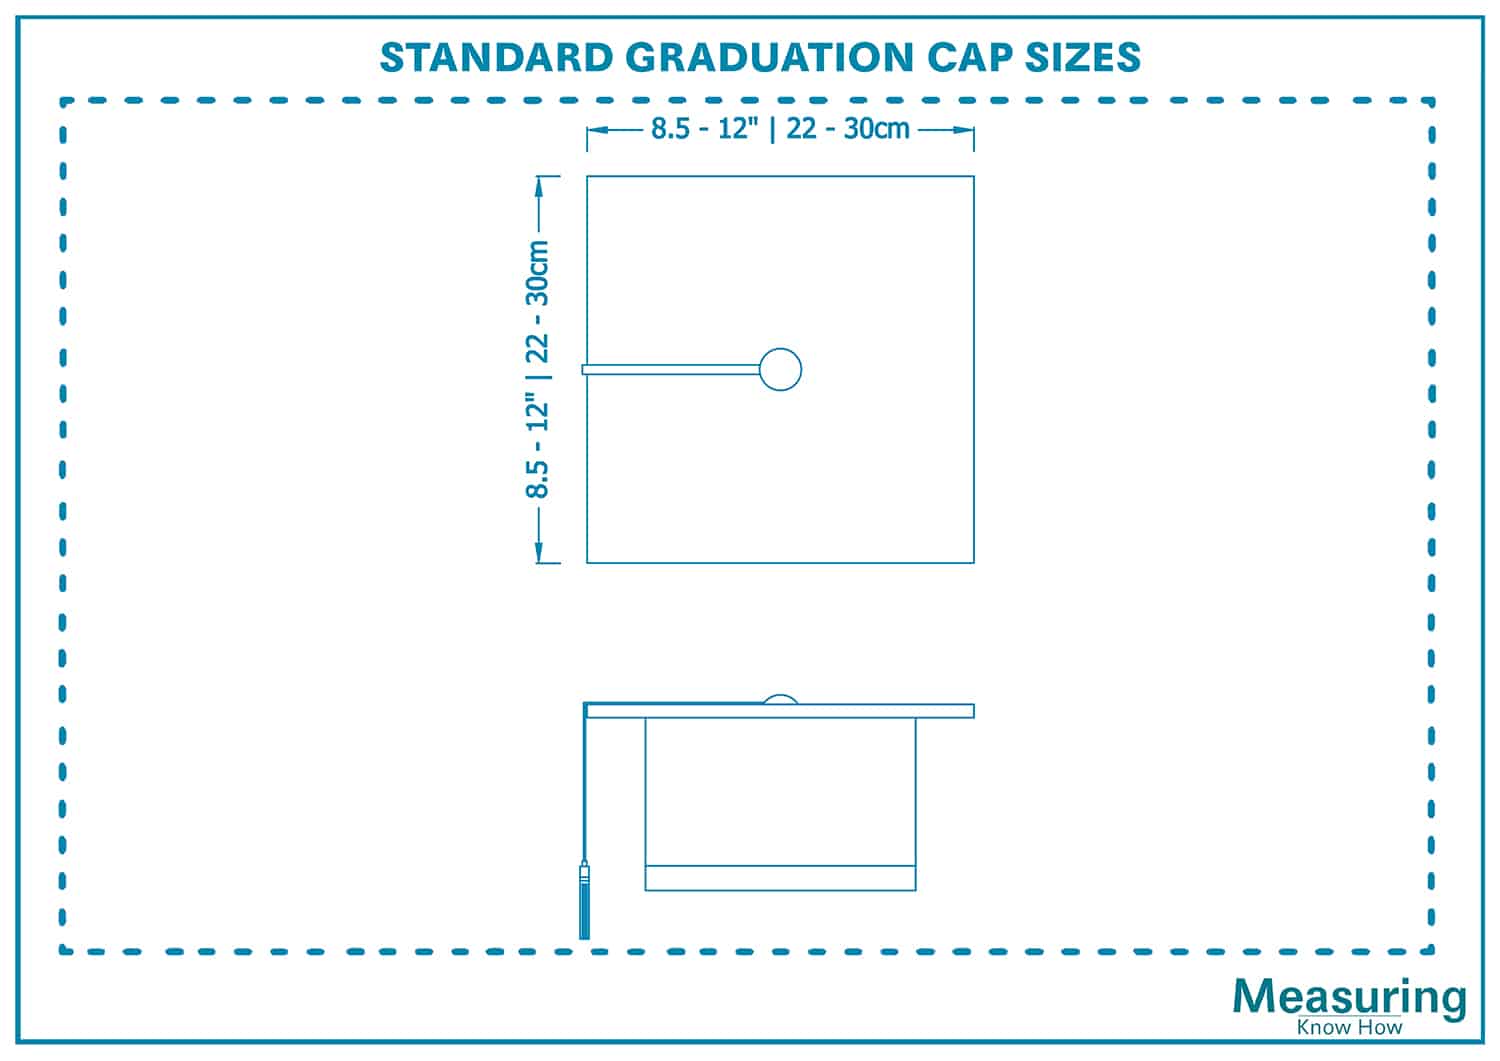 Standard graduation cap sizes